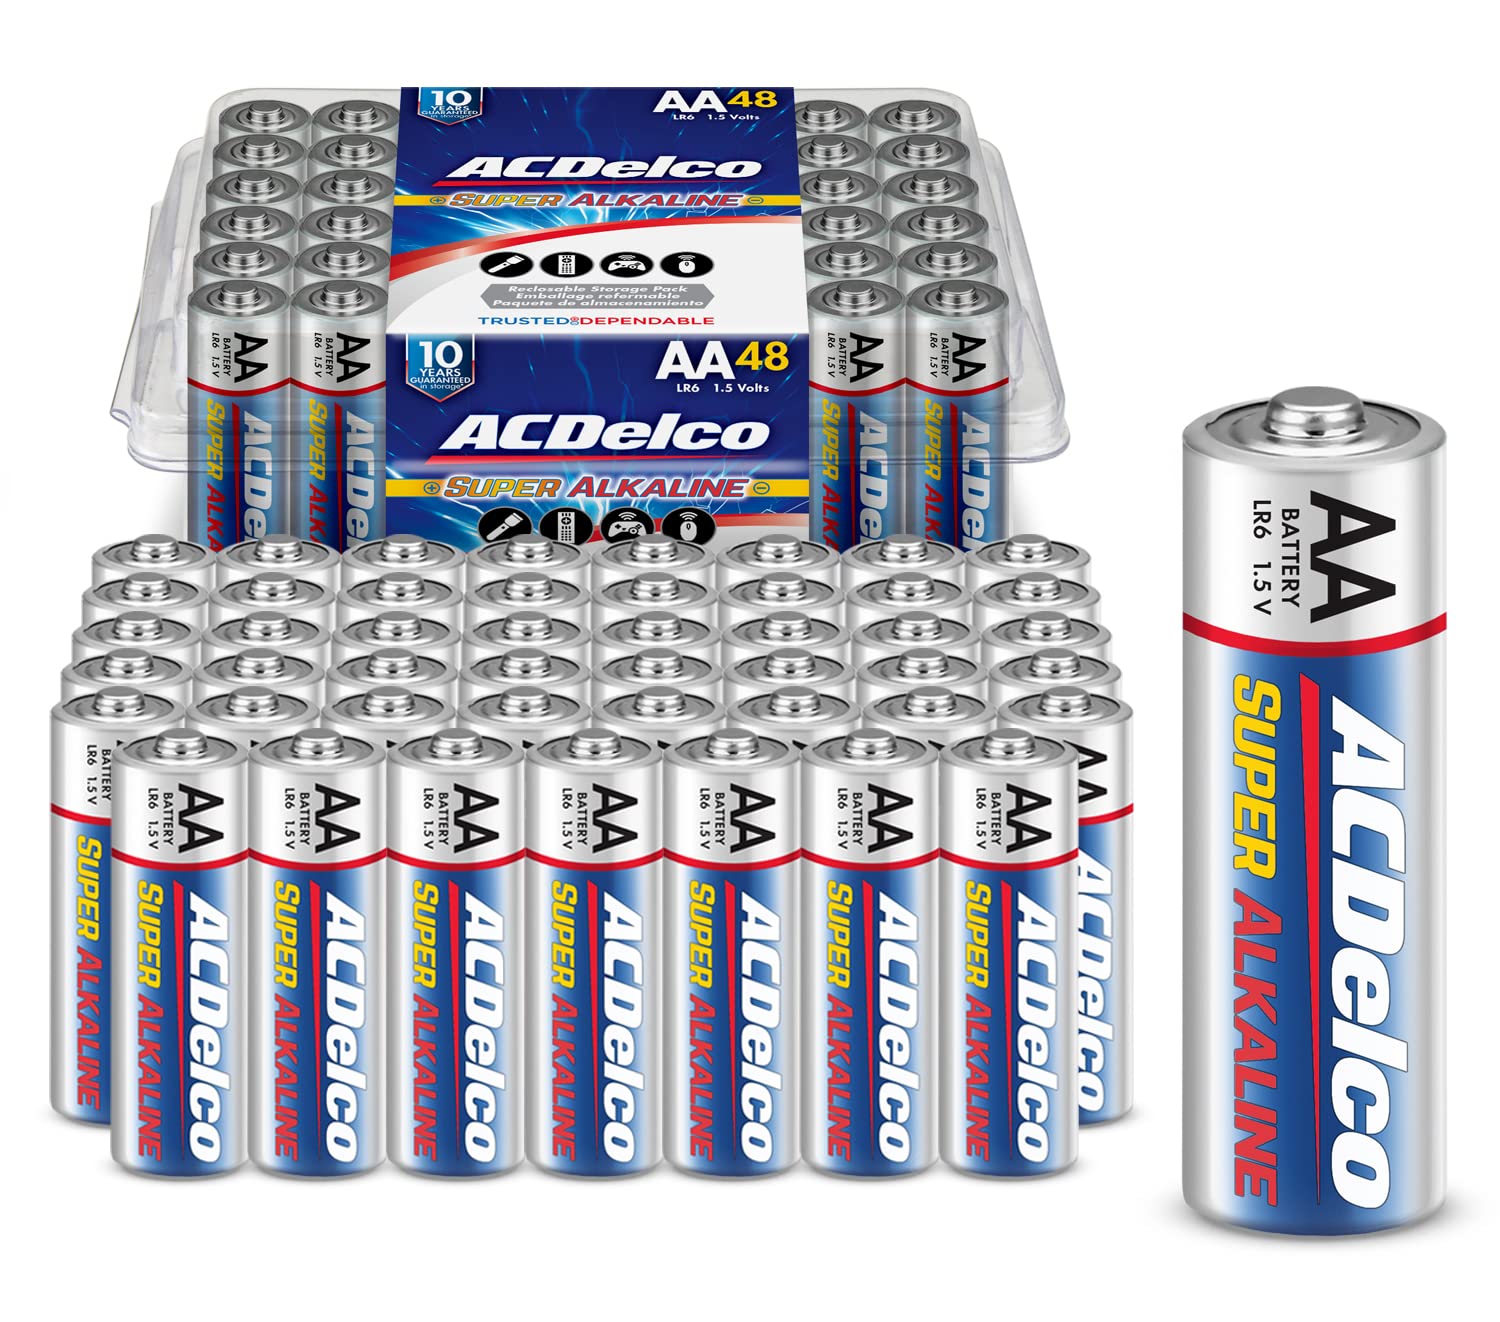 ACDelco 48-Count AA Batteries, Maximum Power Super Alkaline Battery, 10-Year Shelf Life, Recloseable Packaging Blue